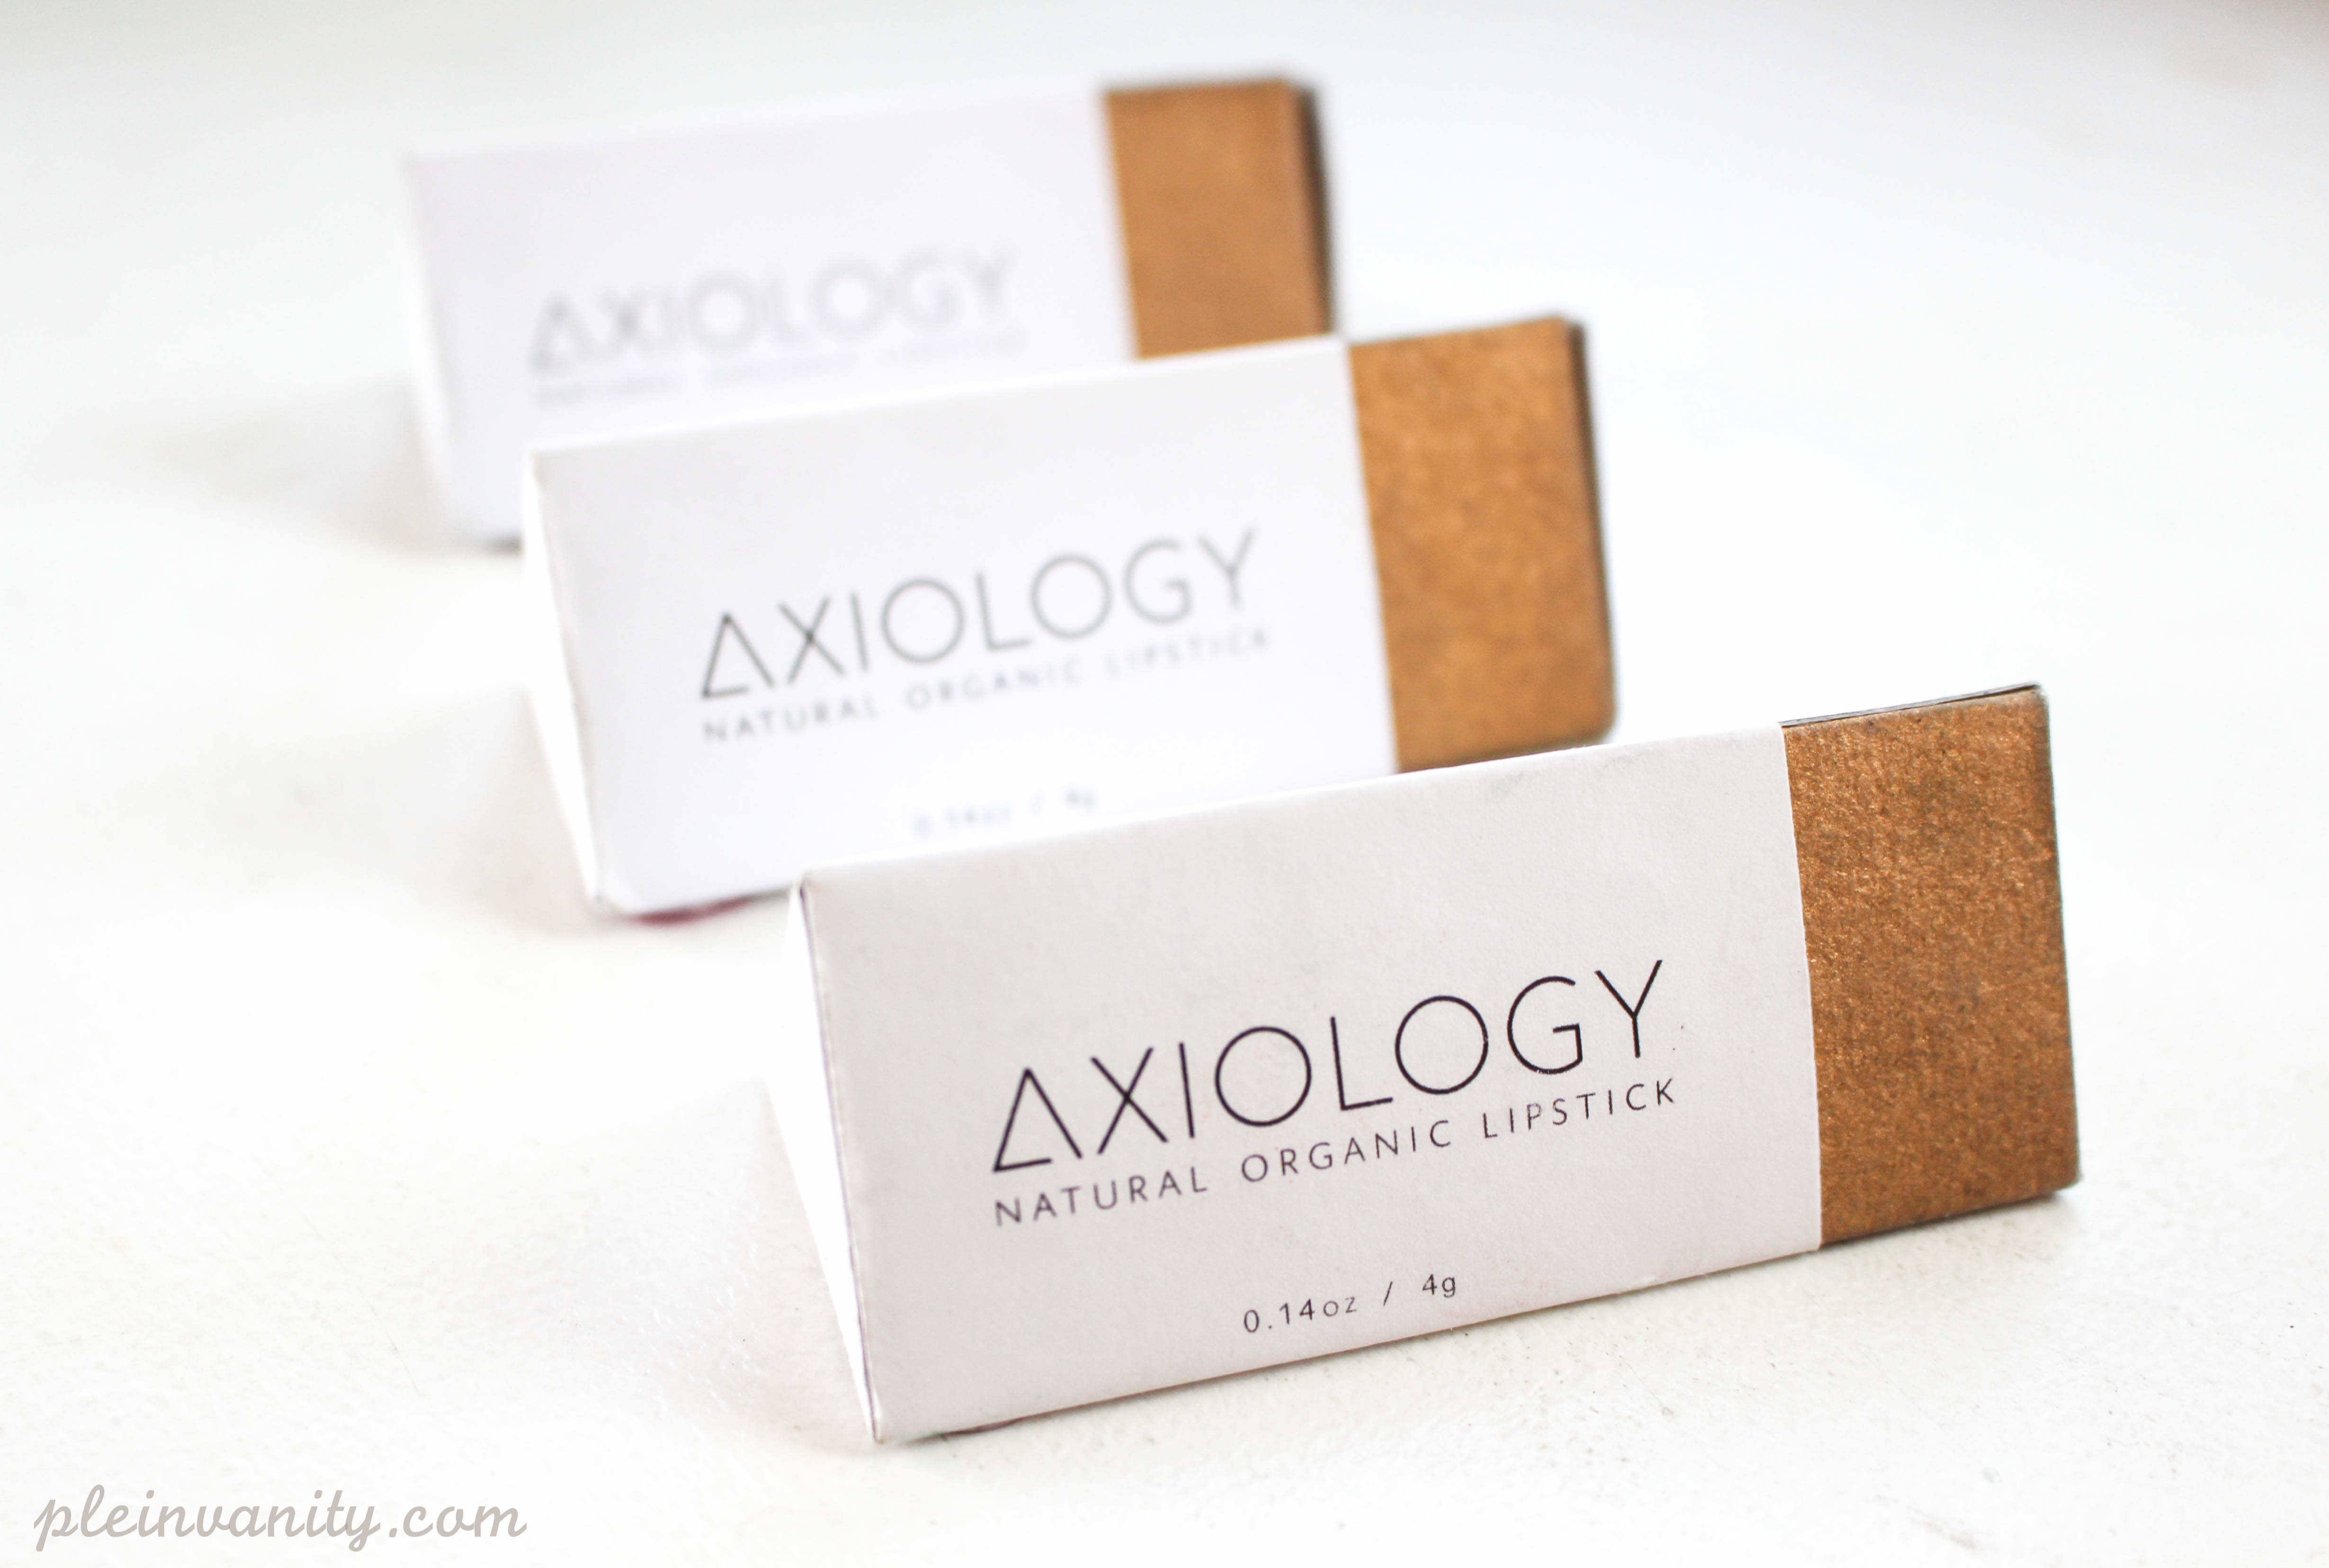 Axiology Lipstick boxes